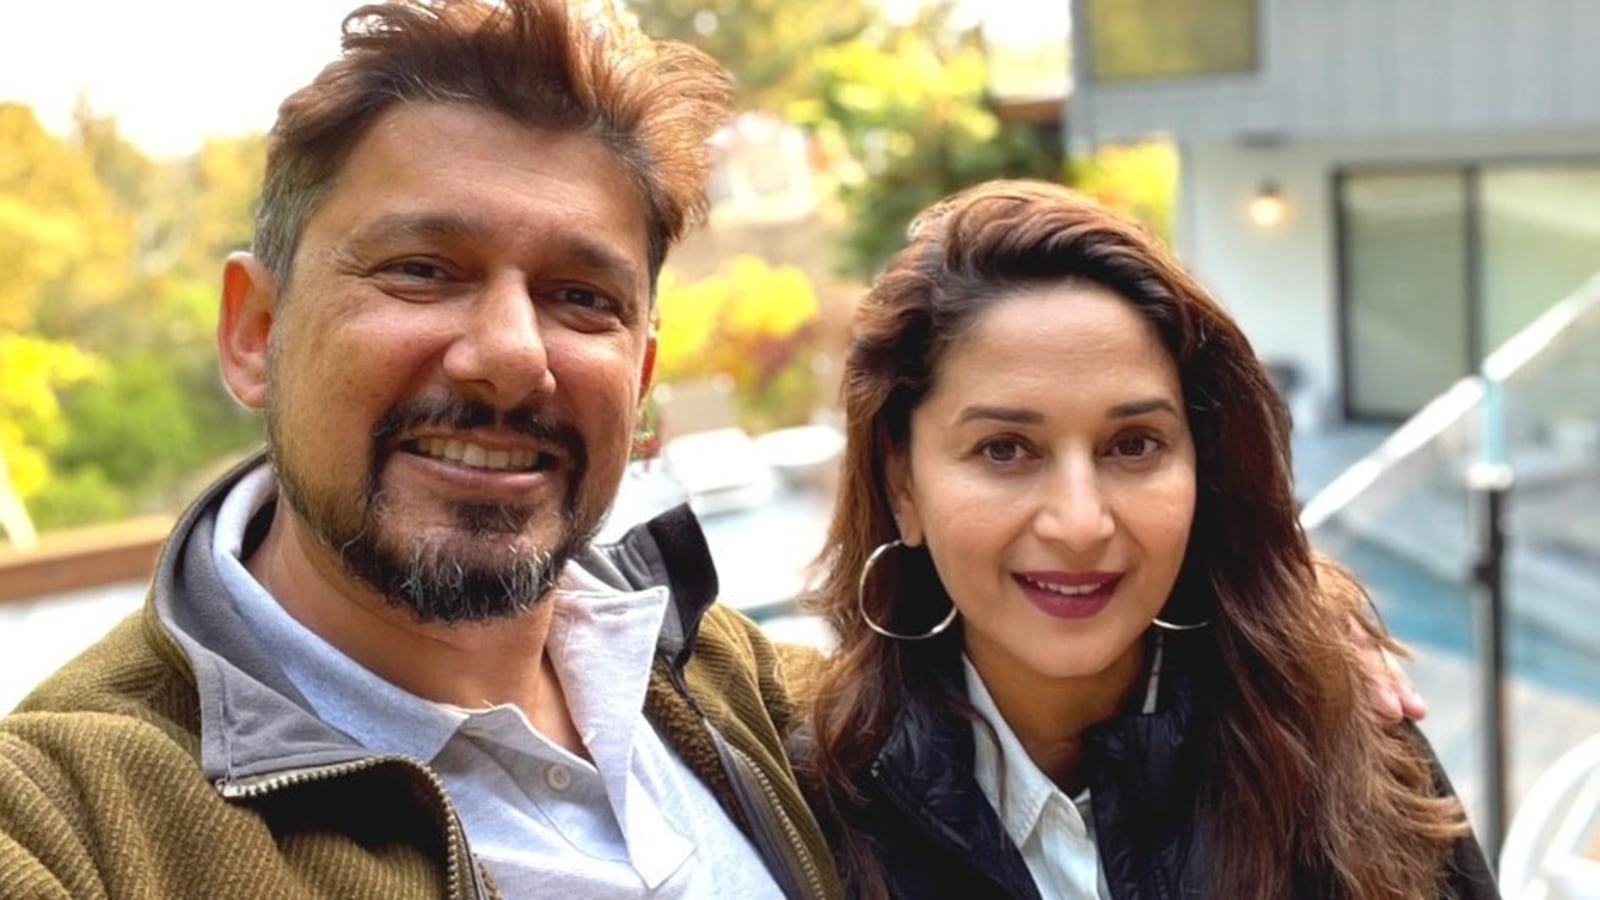 Madhuri Ki Chut Ki Photo - Madhuri Dixit and her husband Shriram Nene flash wide smiles in new photo,  fans call it 'beauty of love' | Bollywood - Hindustan Times